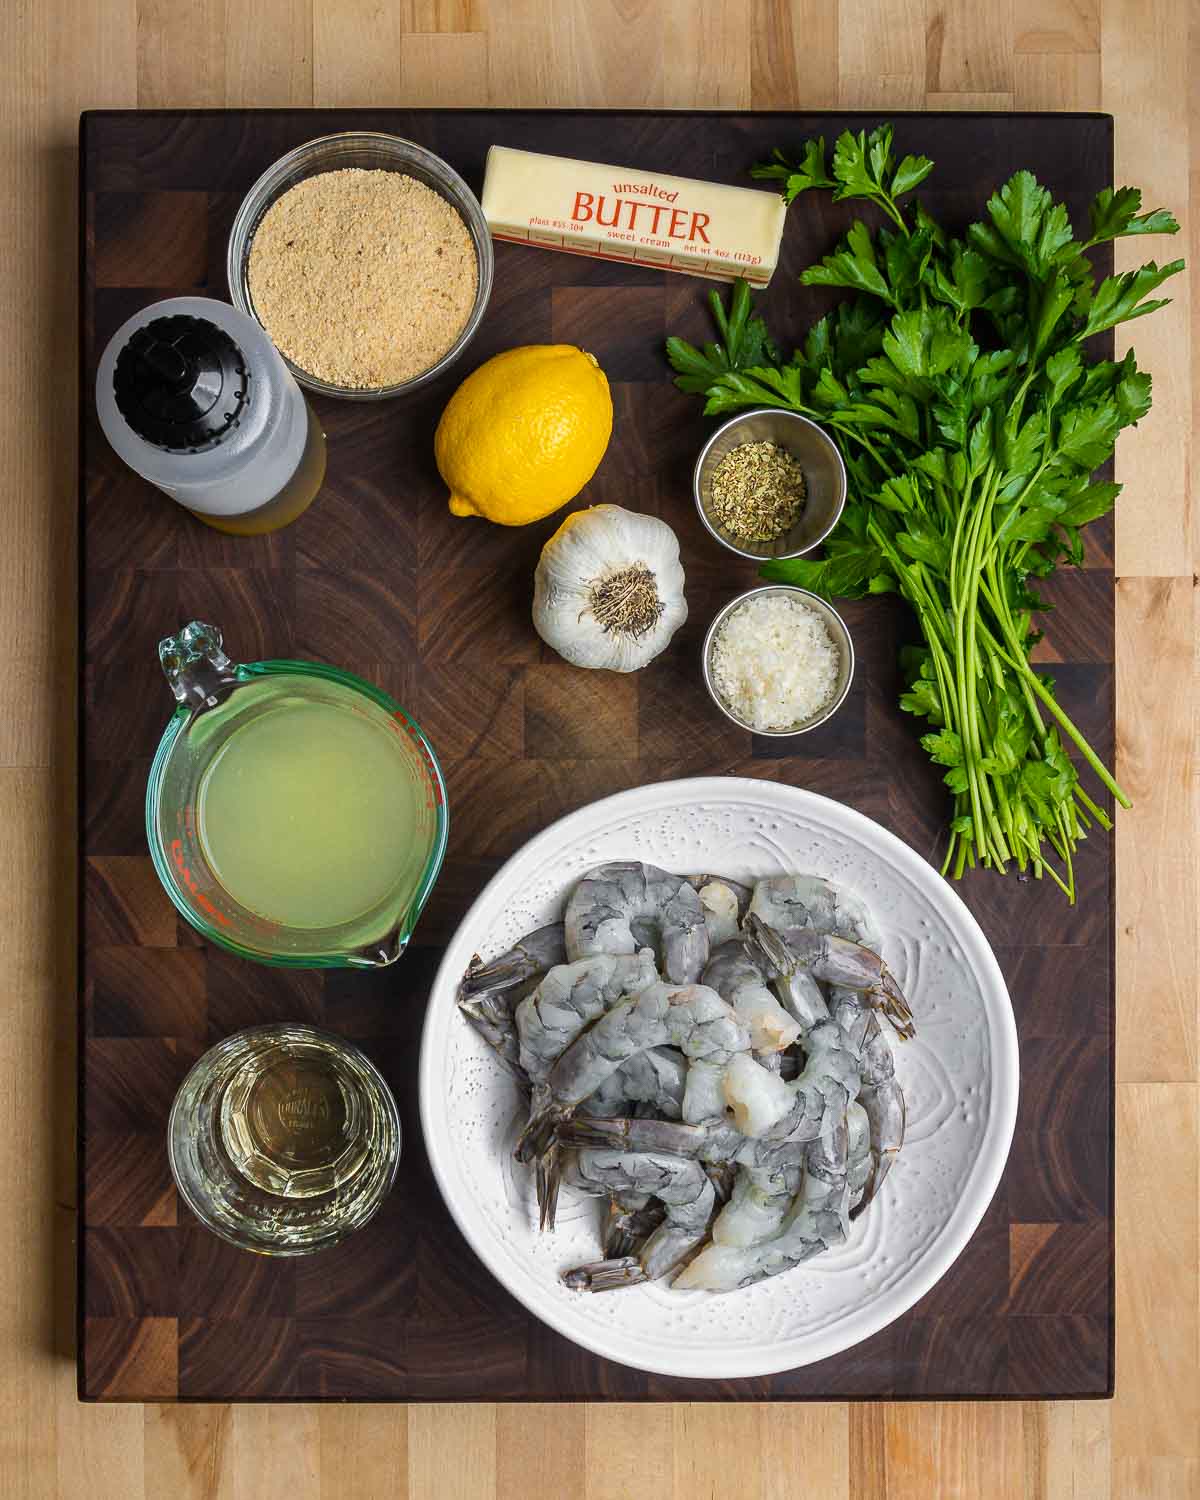 Ingredients shown: breadcrumbs, olive oil, lemon, garlic, parmesan, oregano, parsley, chicken stock, white wine, and shrimp.